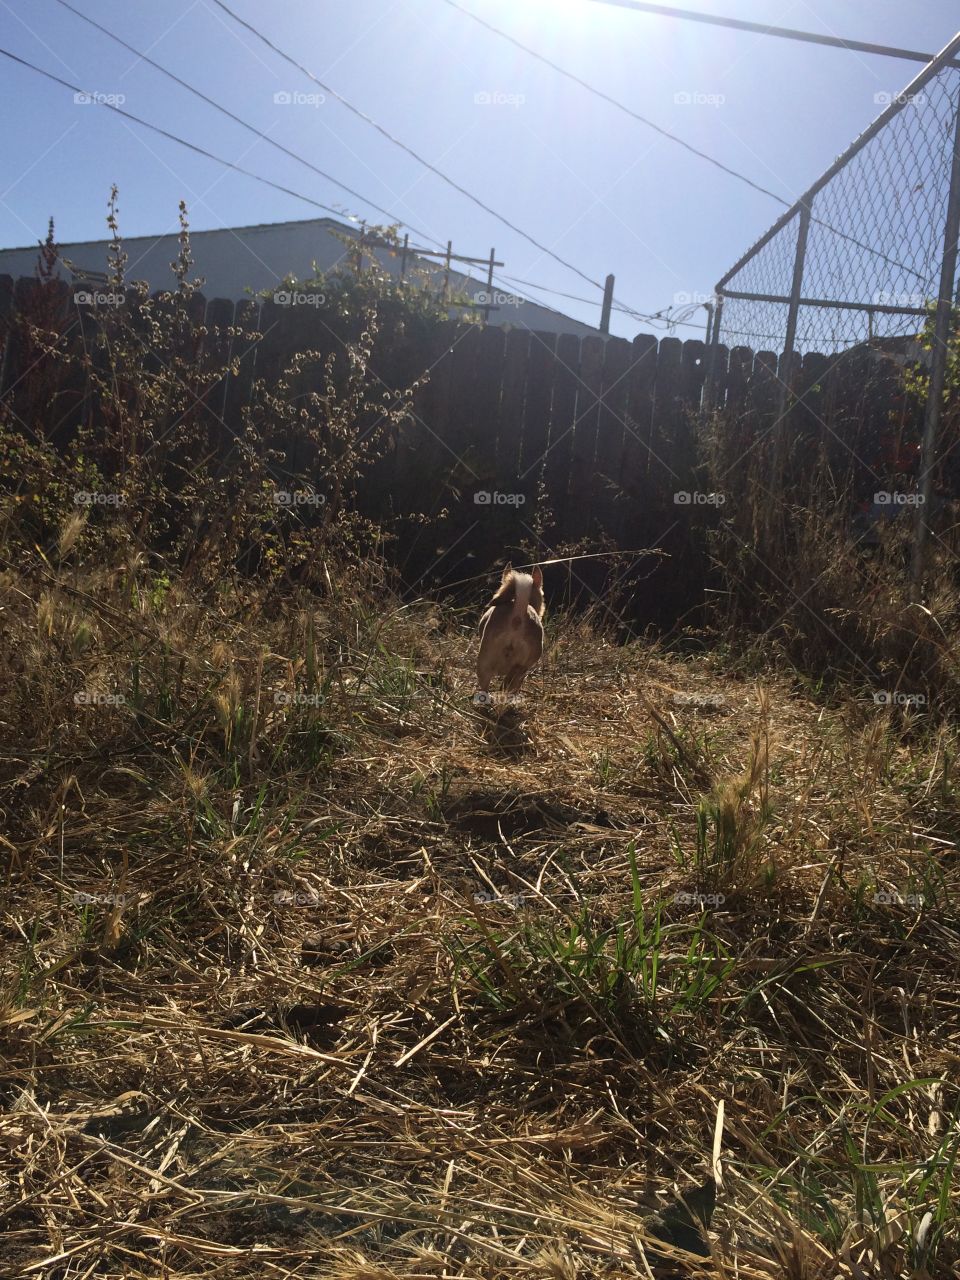 Kahlua running in the backyard